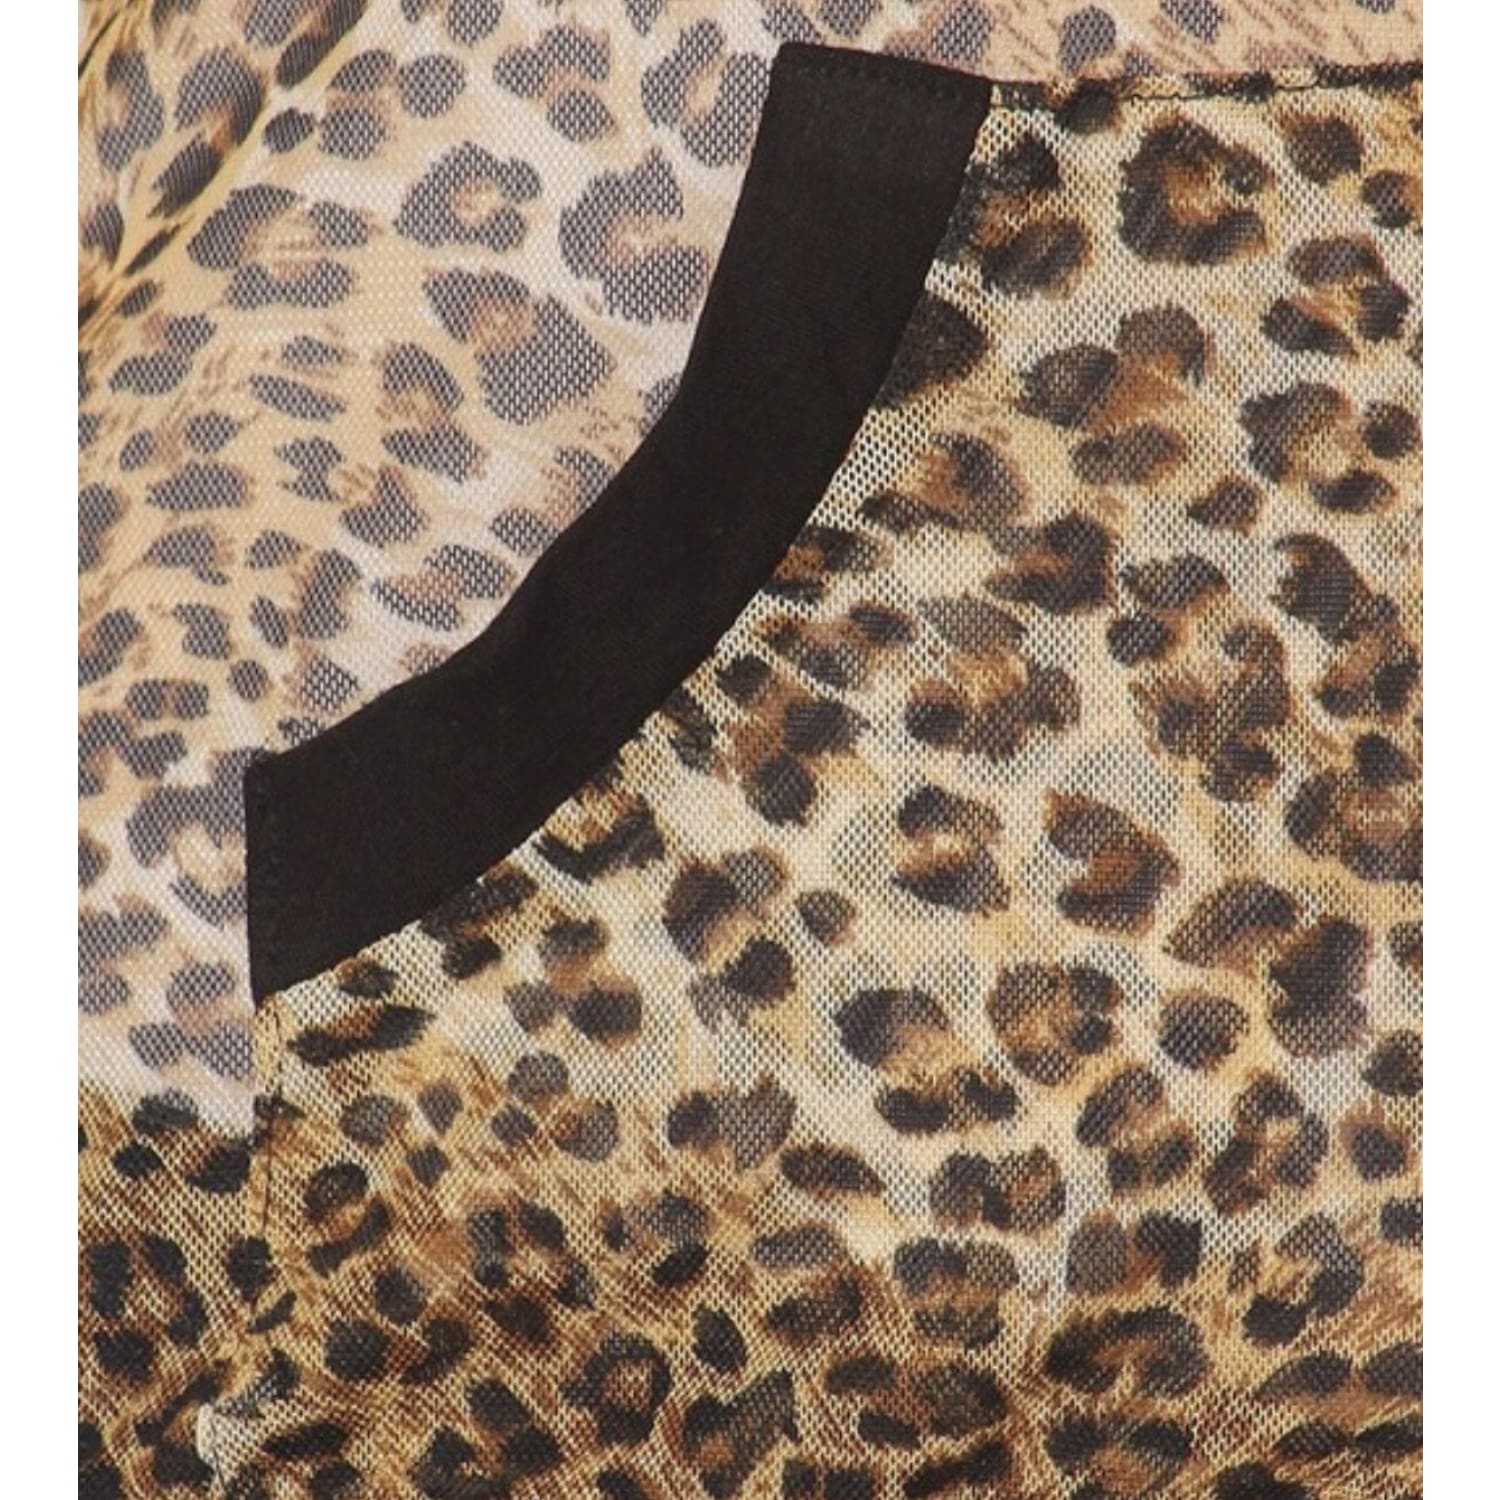 Sheer Mesh Cheetah Jacket